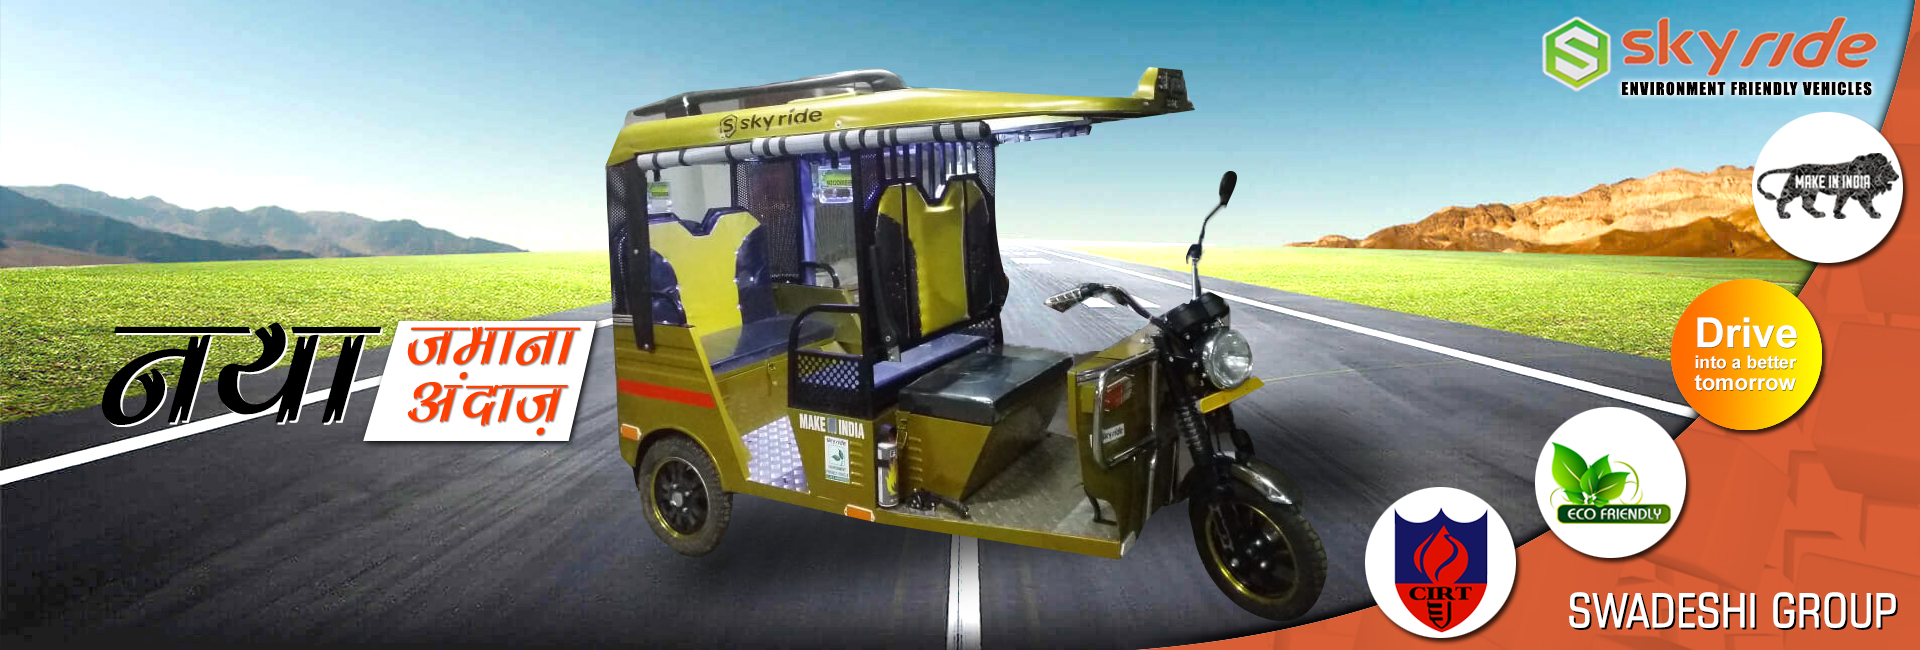 Electric Rickshaw india